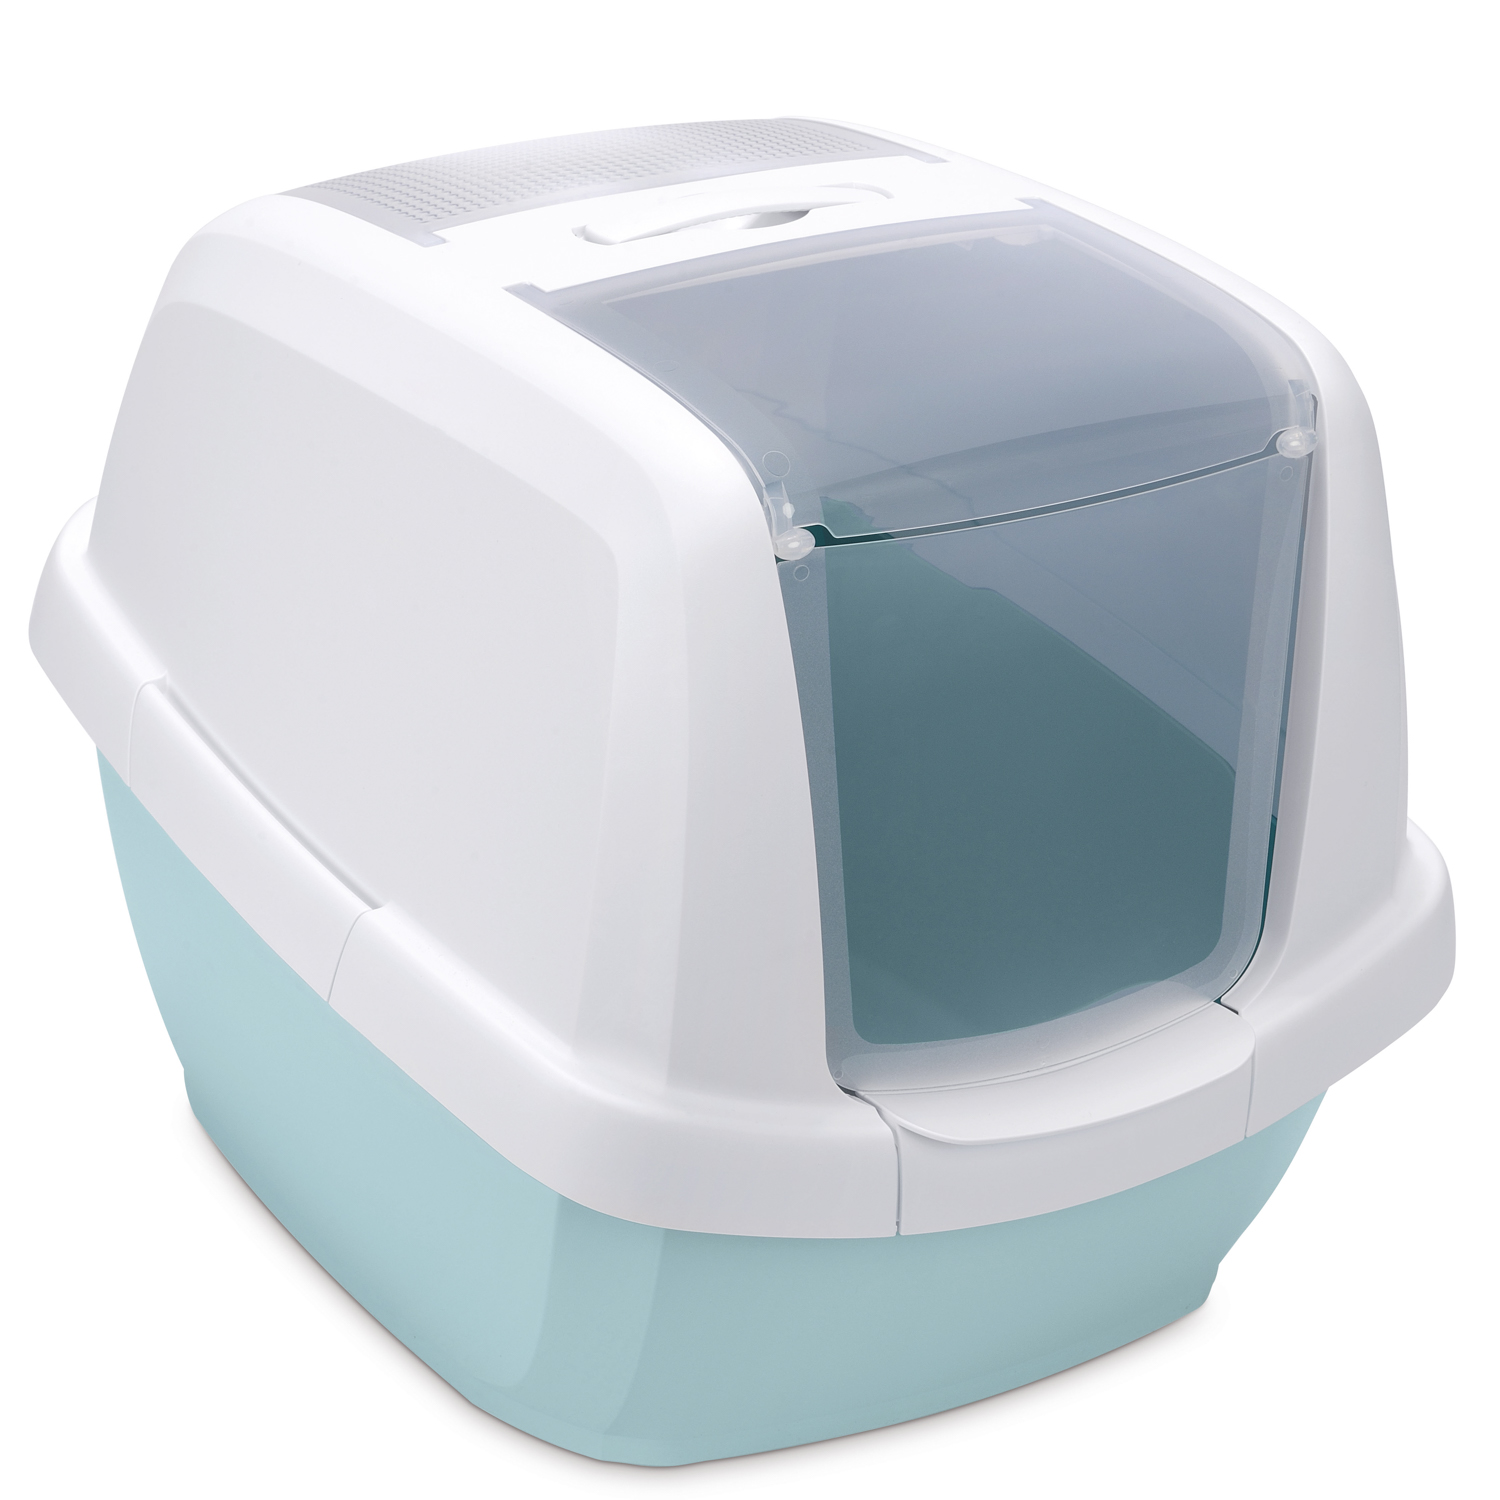 IMAC био-туалет для кошек MADDY 62х47,5х47,5h см, белый/цвет морской волны